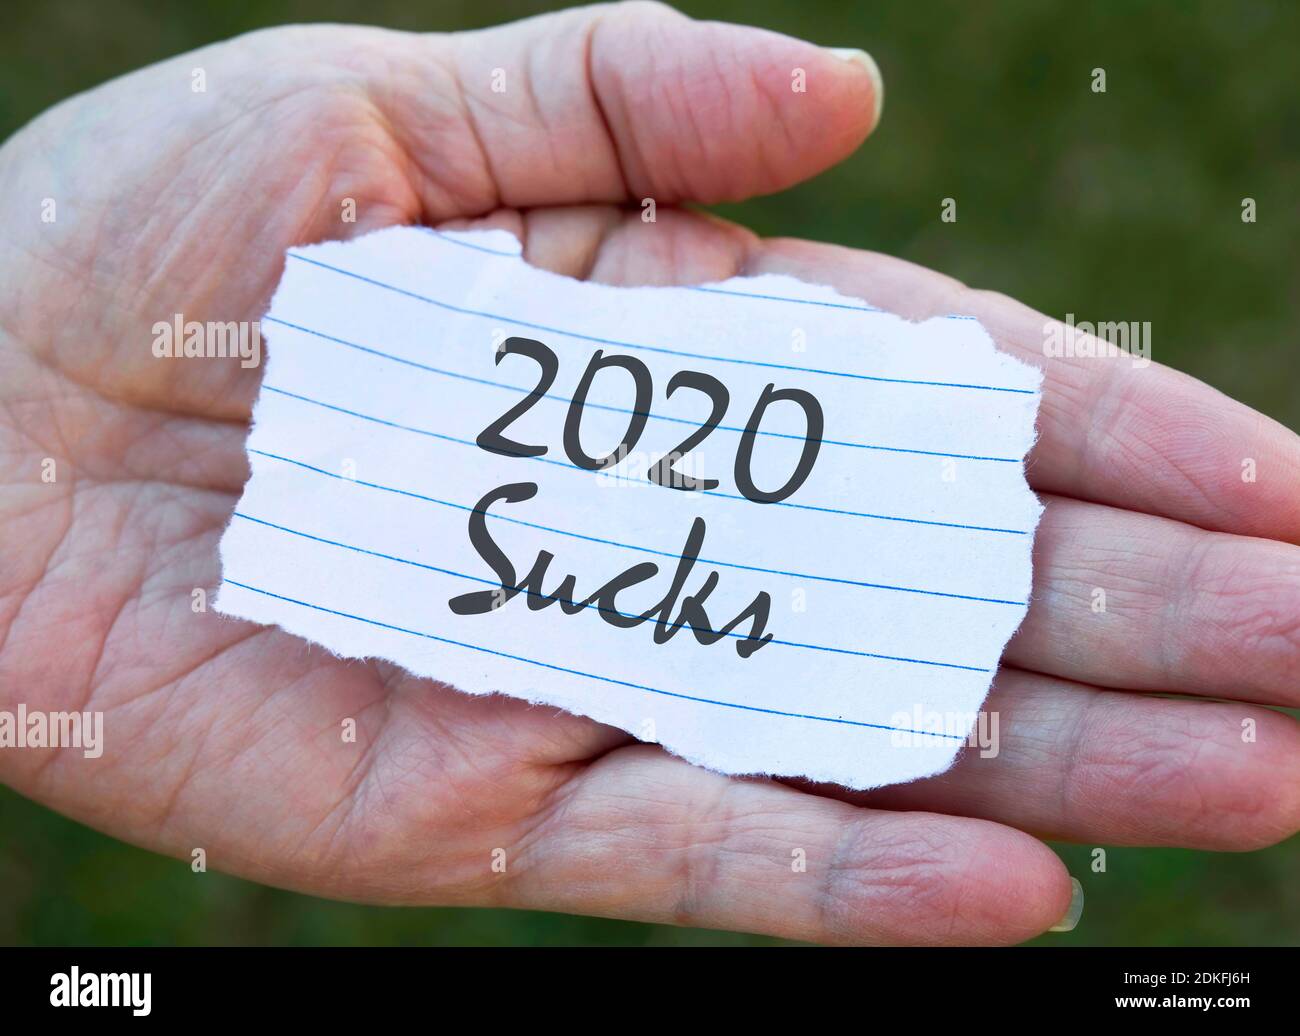 Paper note in hand, 2020 sucks. Stock Photo